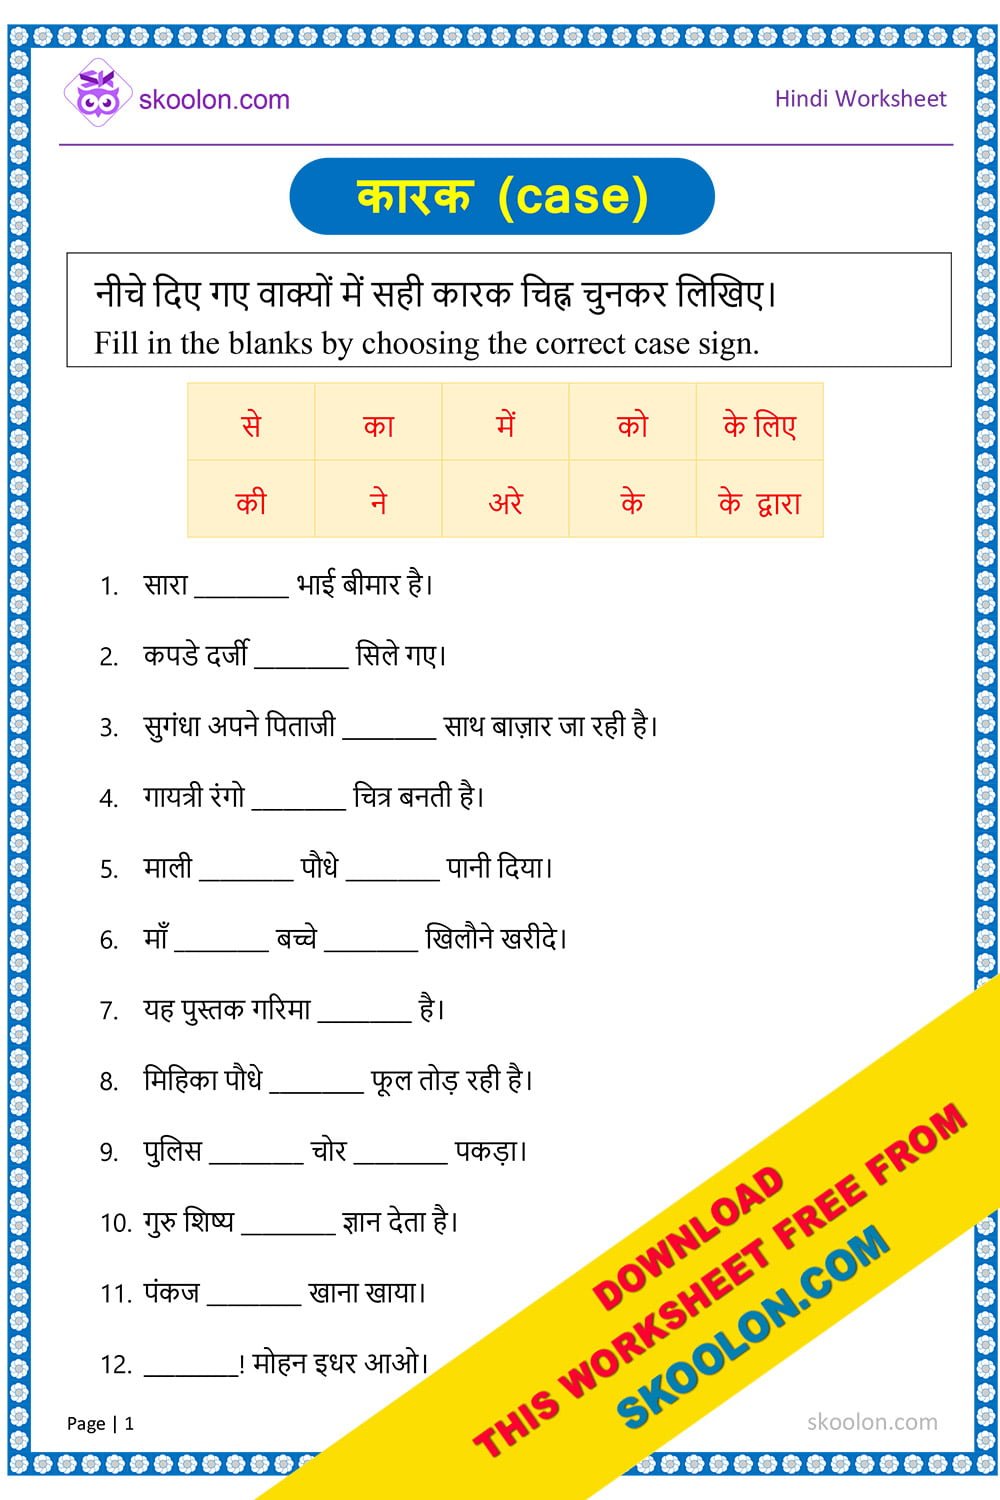 karak-hindi-grammar-worksheet-9-skoolon